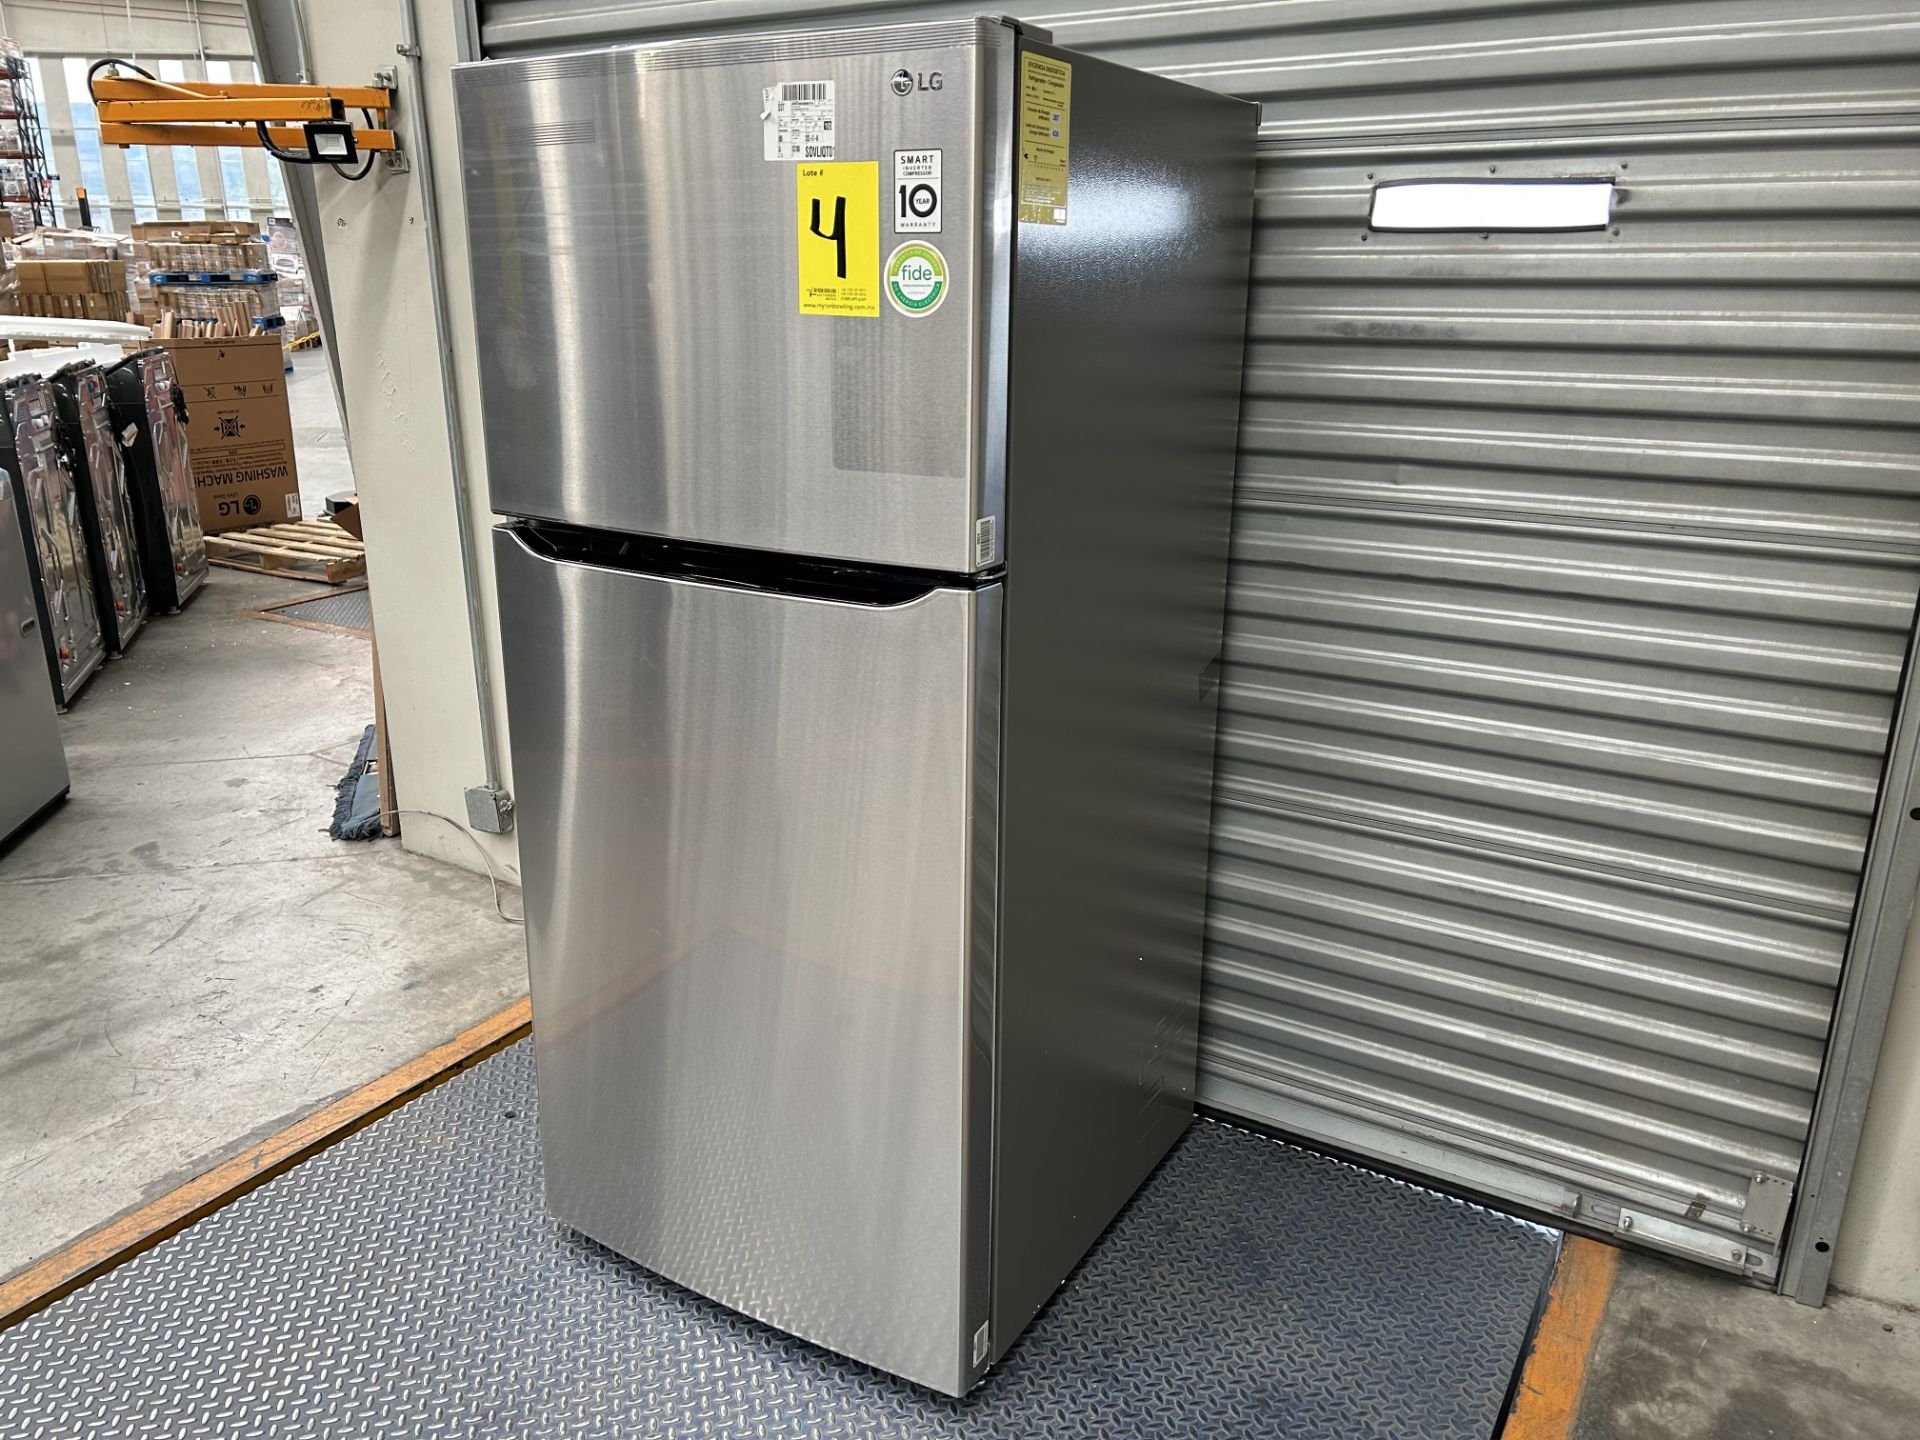 (NUEVO) Lote de 1 Refrigerador Marca LG, Modelo LT57BPSX, Serie 0C217, Color GRIS - Image 3 of 5